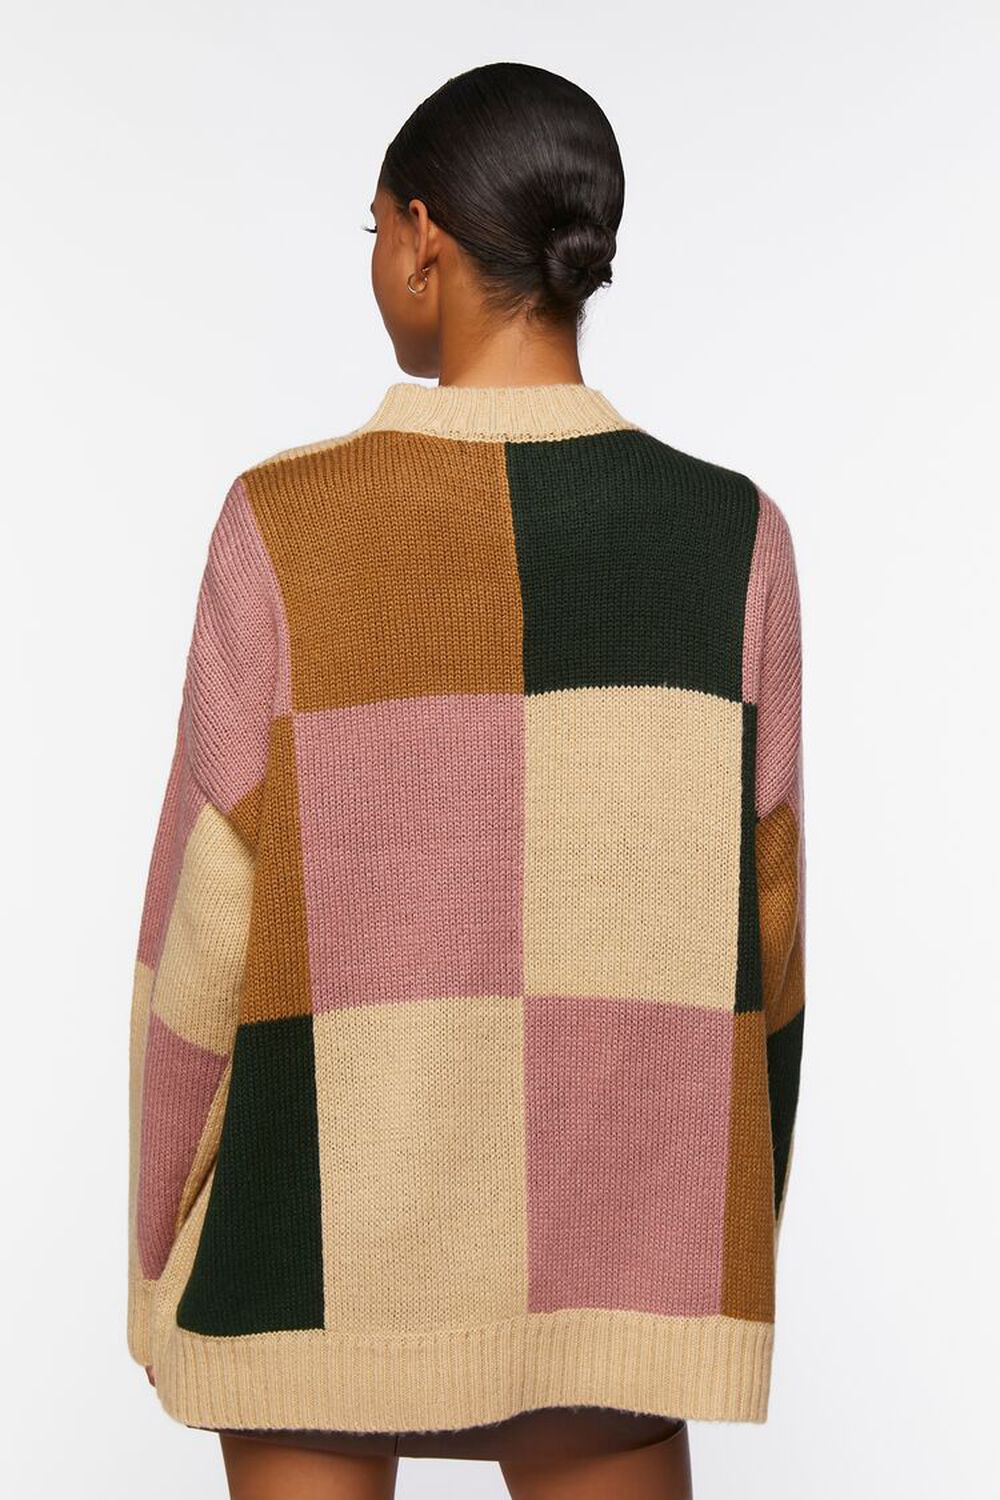 MOCHA/MULTI Colorblock Mock Neck Sweater, image 3